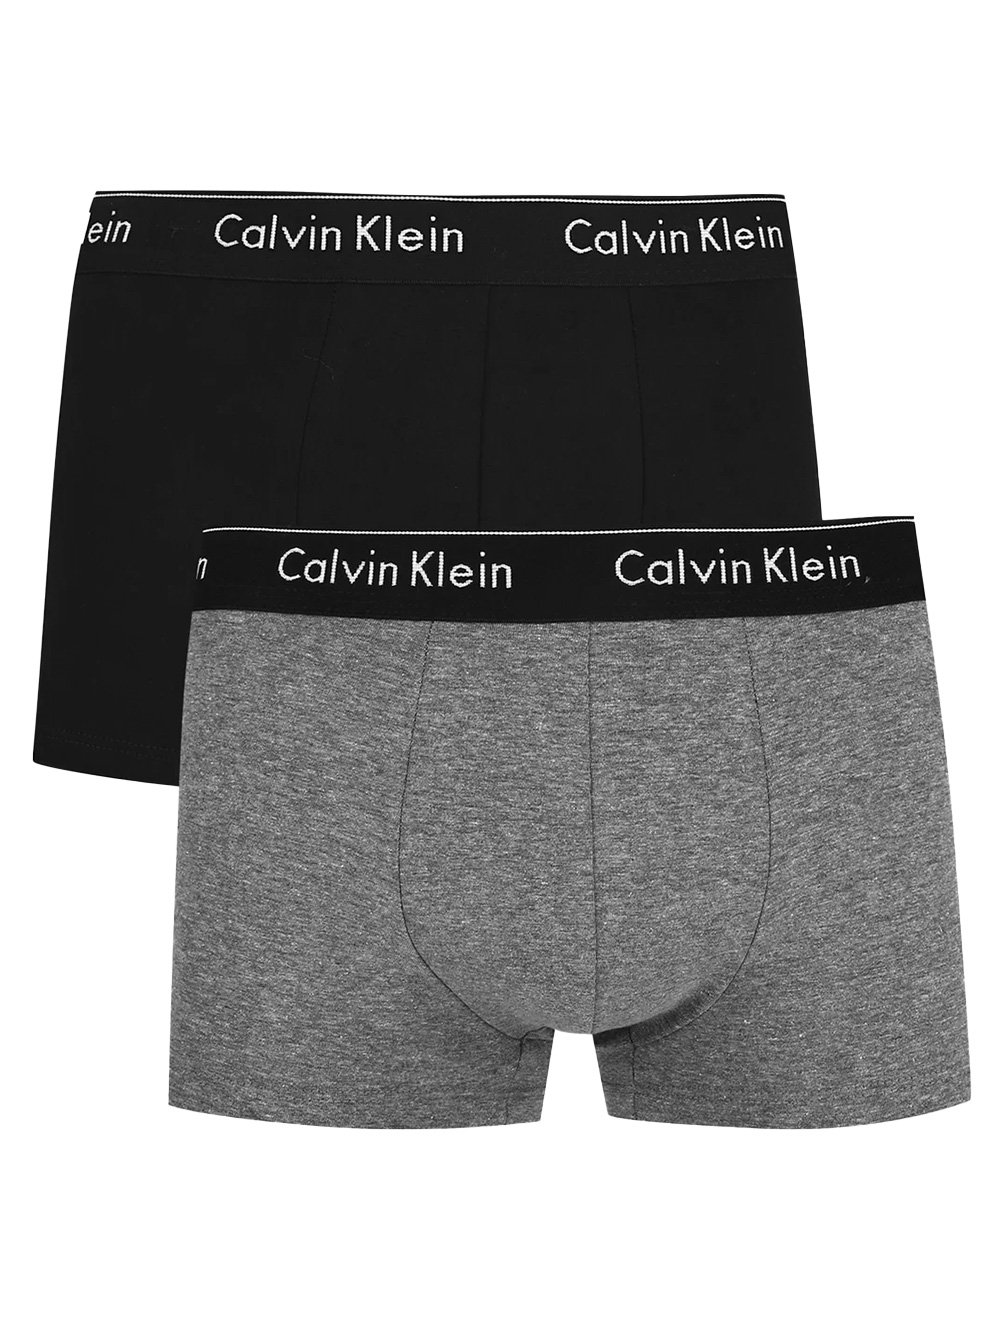 Cuecas Calvin Klein Trunk Modern Cotton Preta / Chumbo Pack 2UN